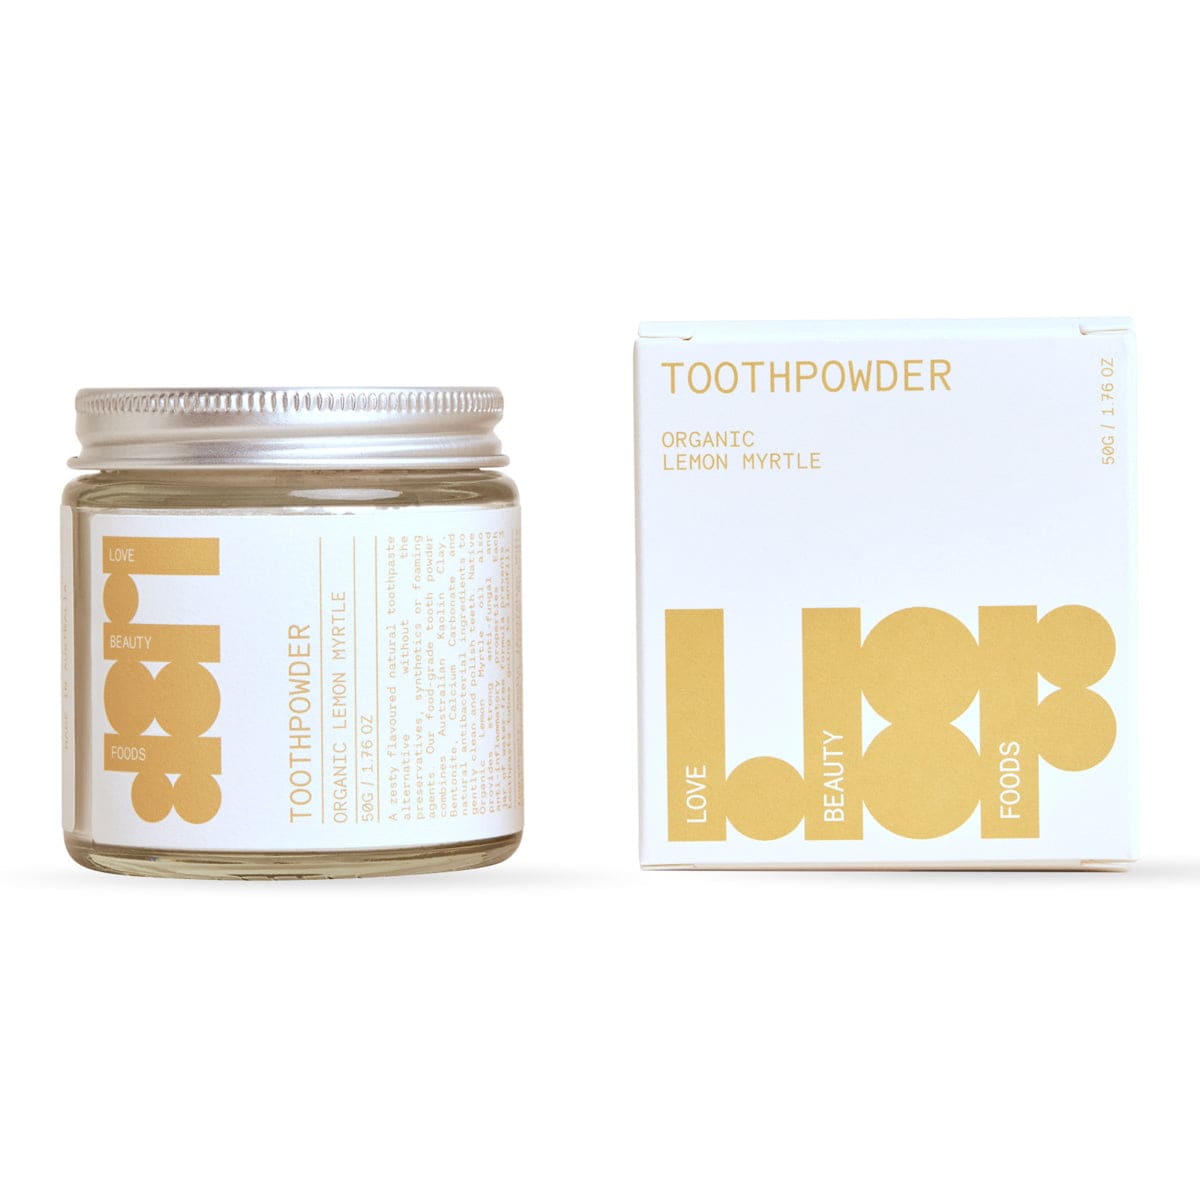 Love Beauty Foods Tooth powder Organic Lemon Myrtle 50g